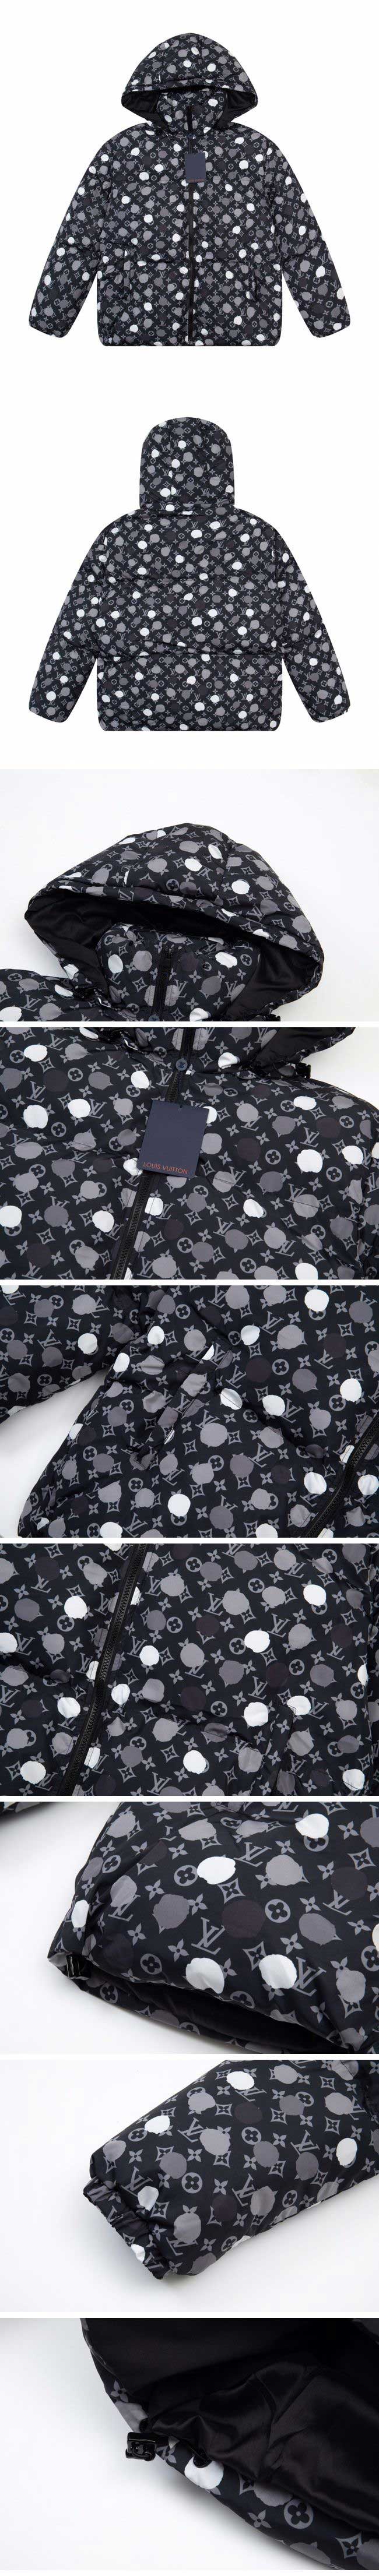 Louis Vuitton x Yayoi Kusama Collaboration Down Jacket ルイヴィトン x 草間彌生 コラボ ダウンジャケット